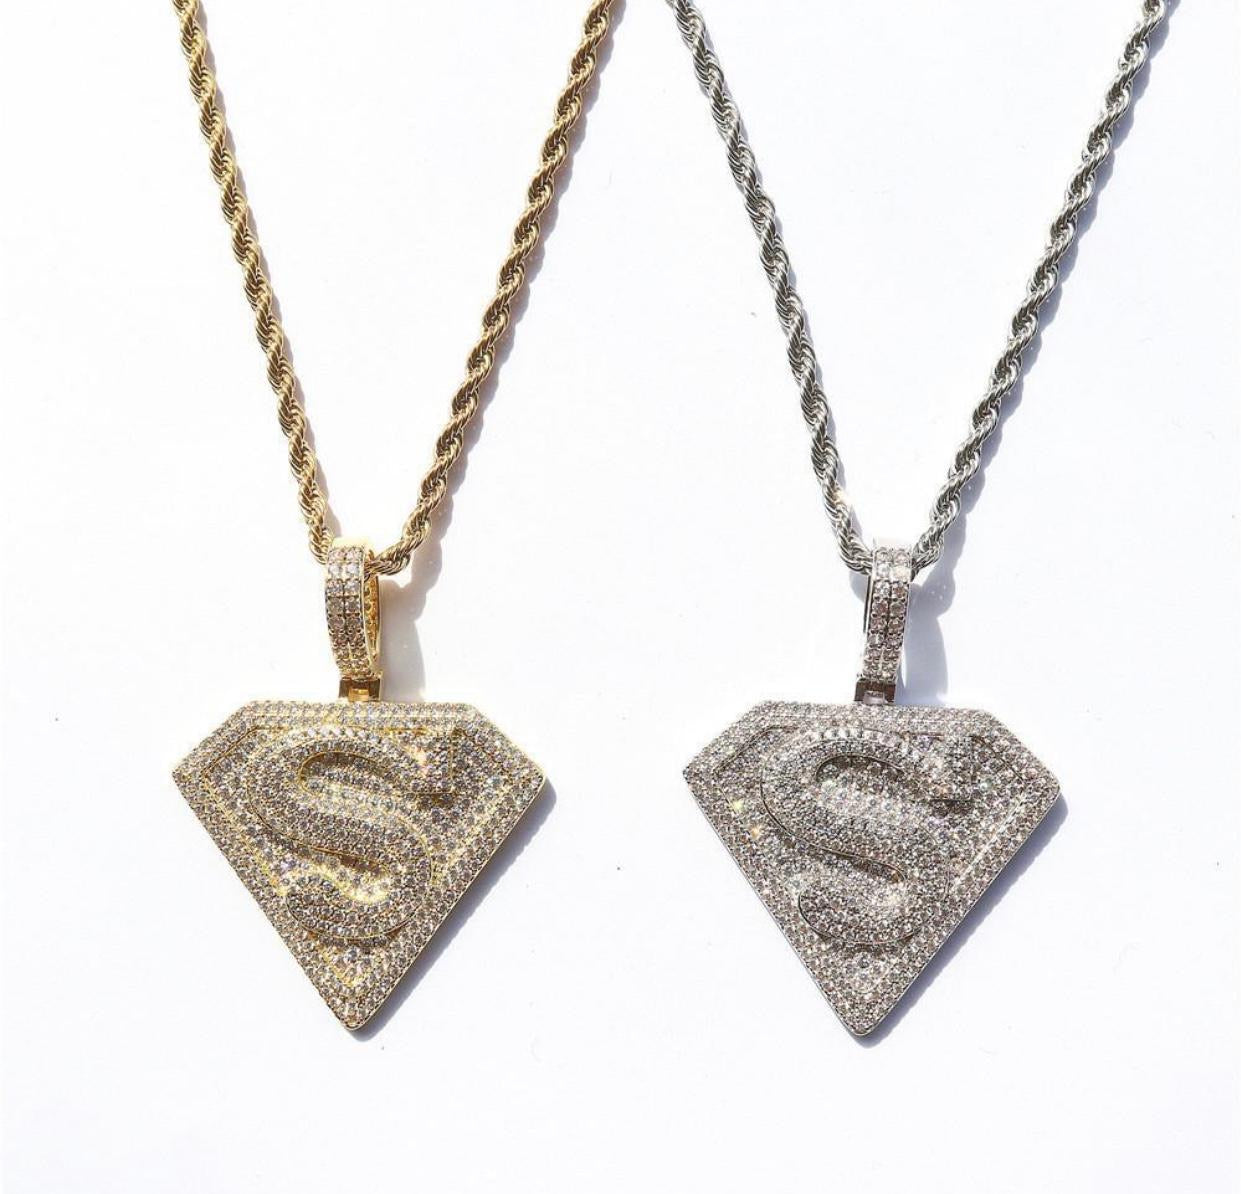 Superman pendants with chain combo set